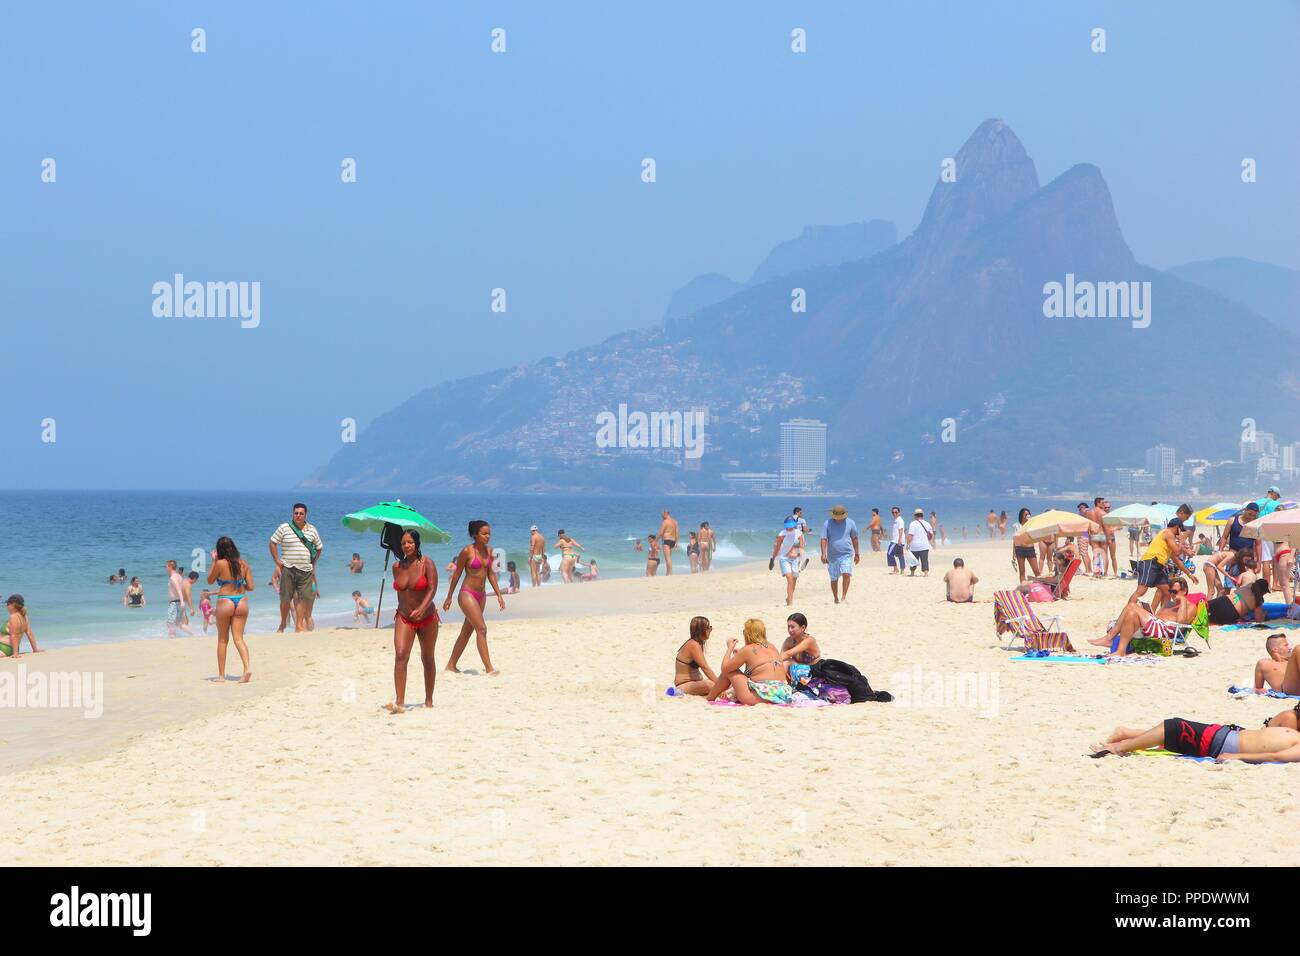 RIO DE JANEIRO, BRAZIL - OCTOBER 19, 2014: People visit Ipanema beach in Rio de Janeiro. In 2013 1.6 million international tourists visited Rio. Stock Photo